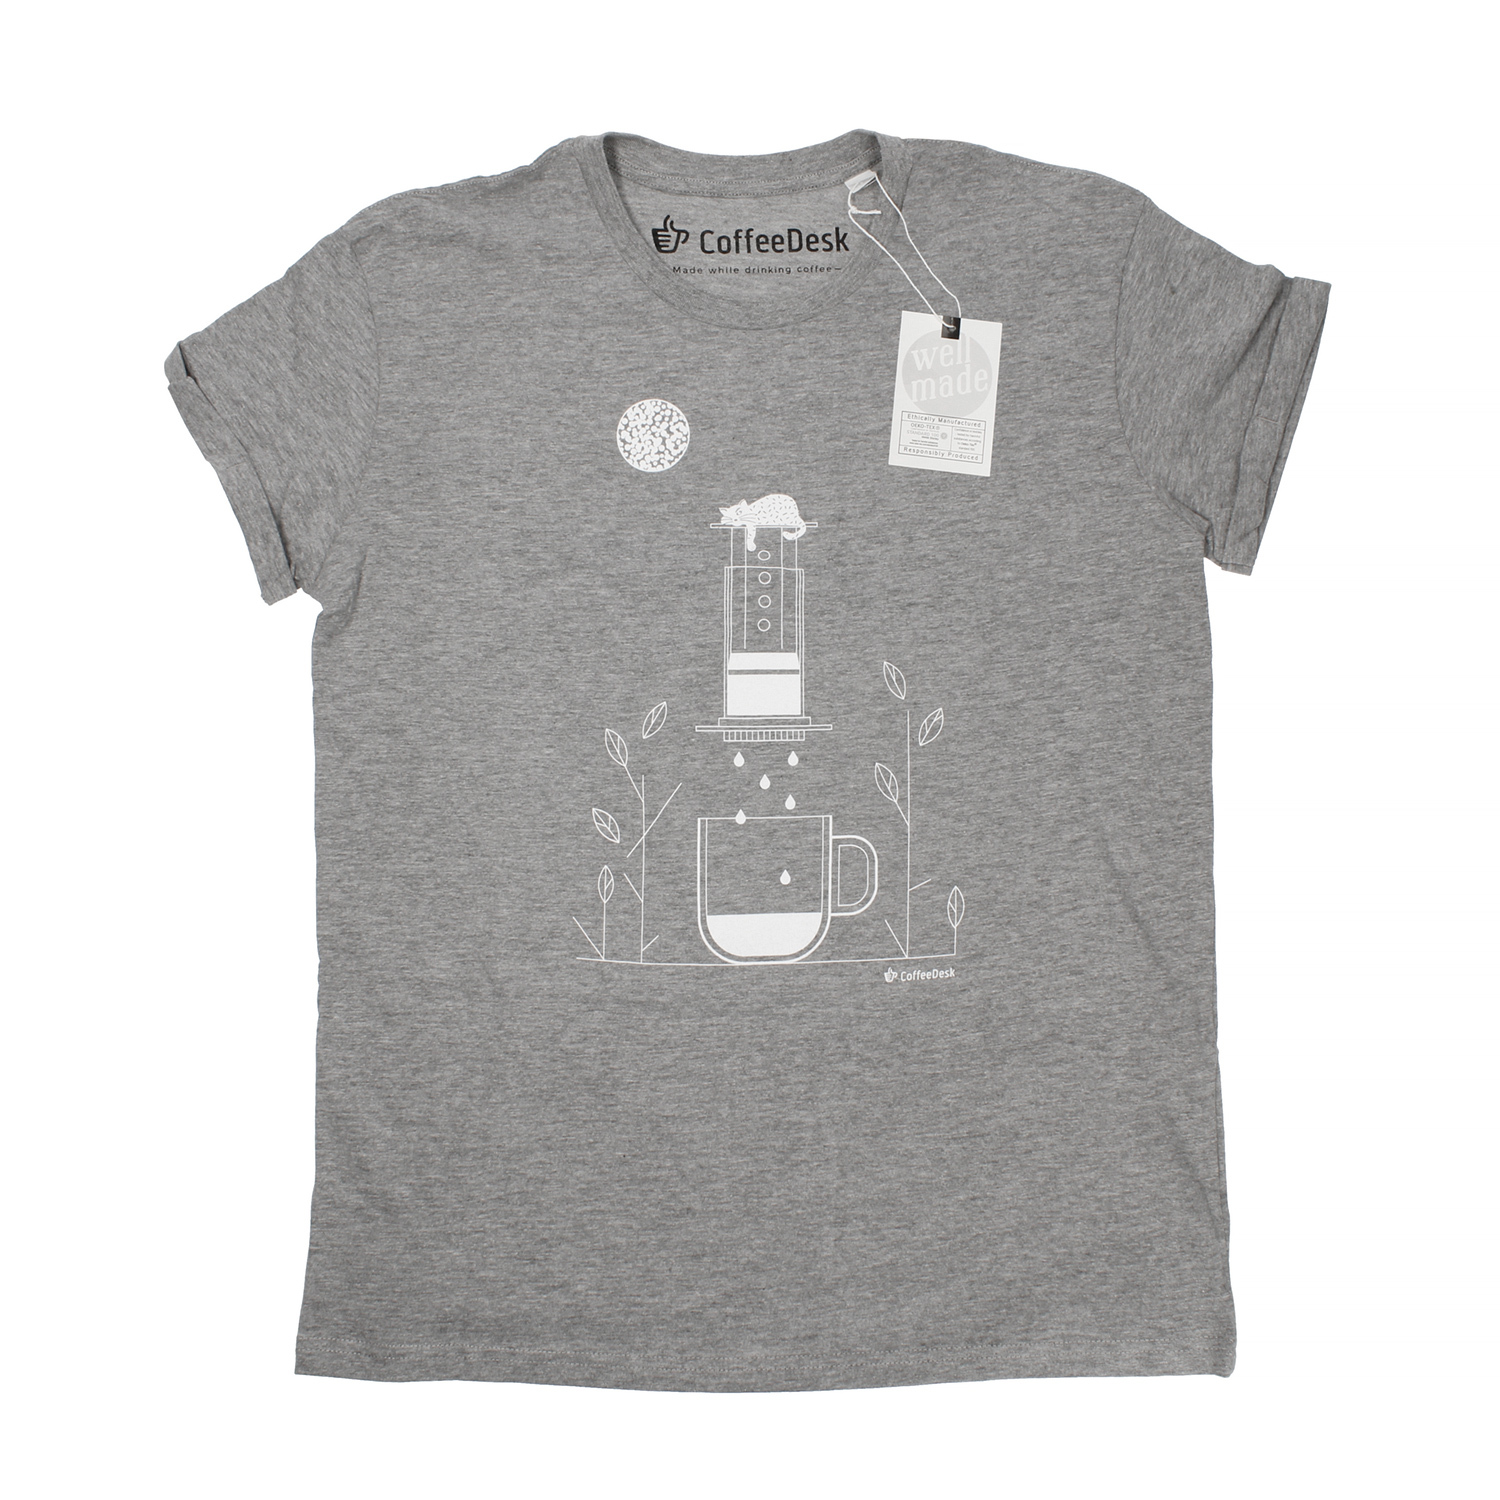 Coffeedesk AeroPress Men's Grey T-shirt - L